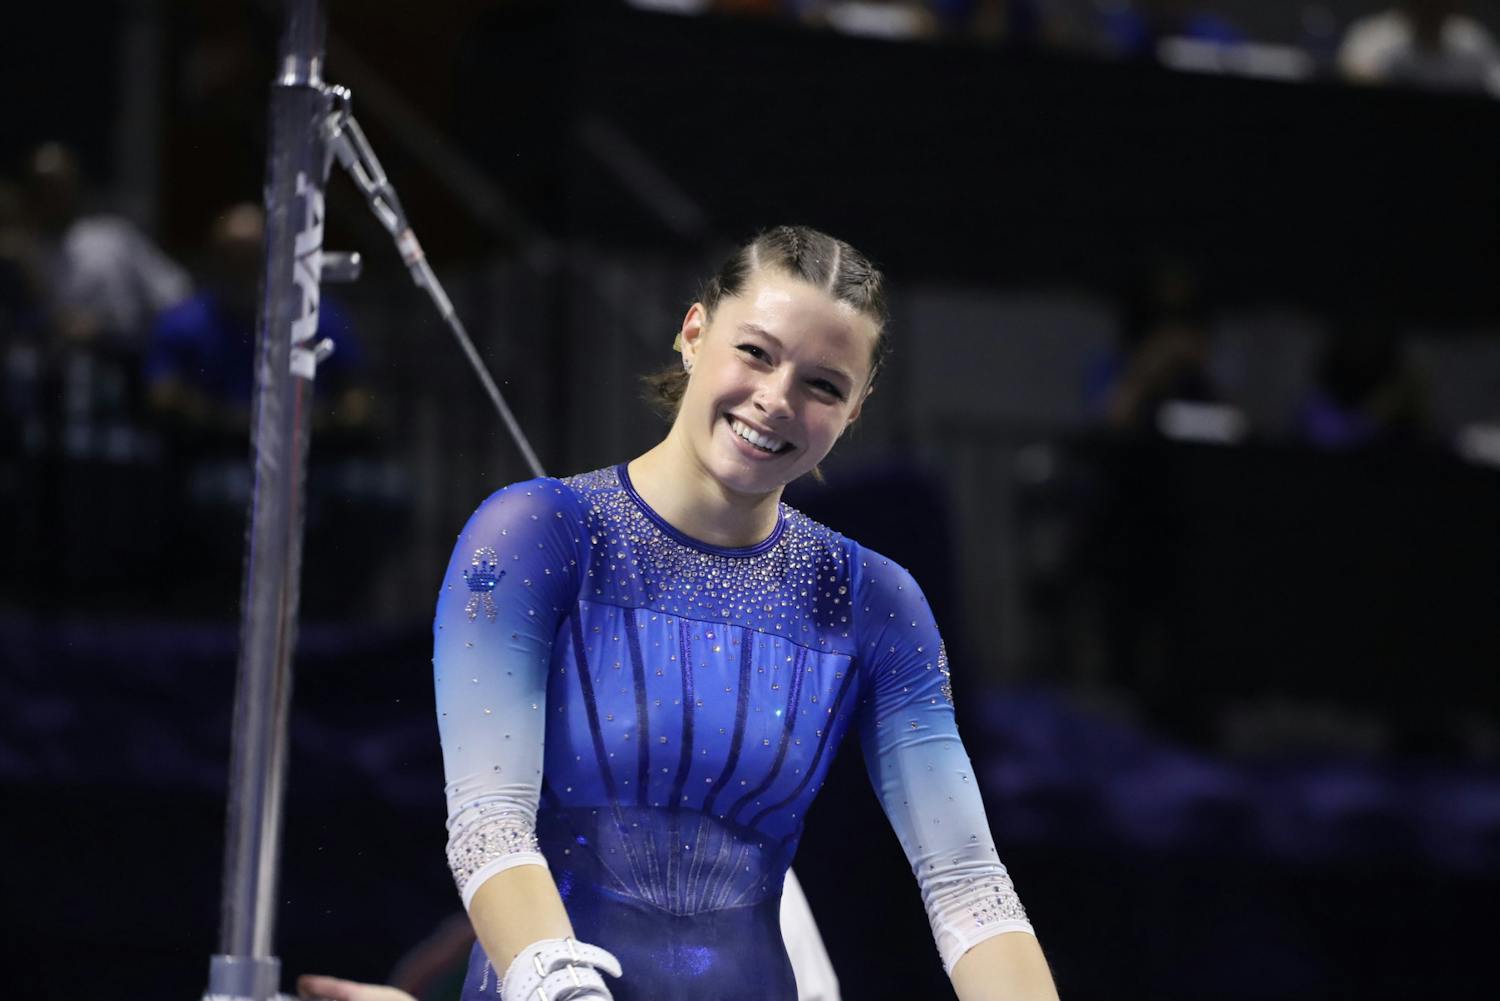 UF gymnastics alum Megan Skaggs will return to the program as an assistant to head coach Jenny Rowland.